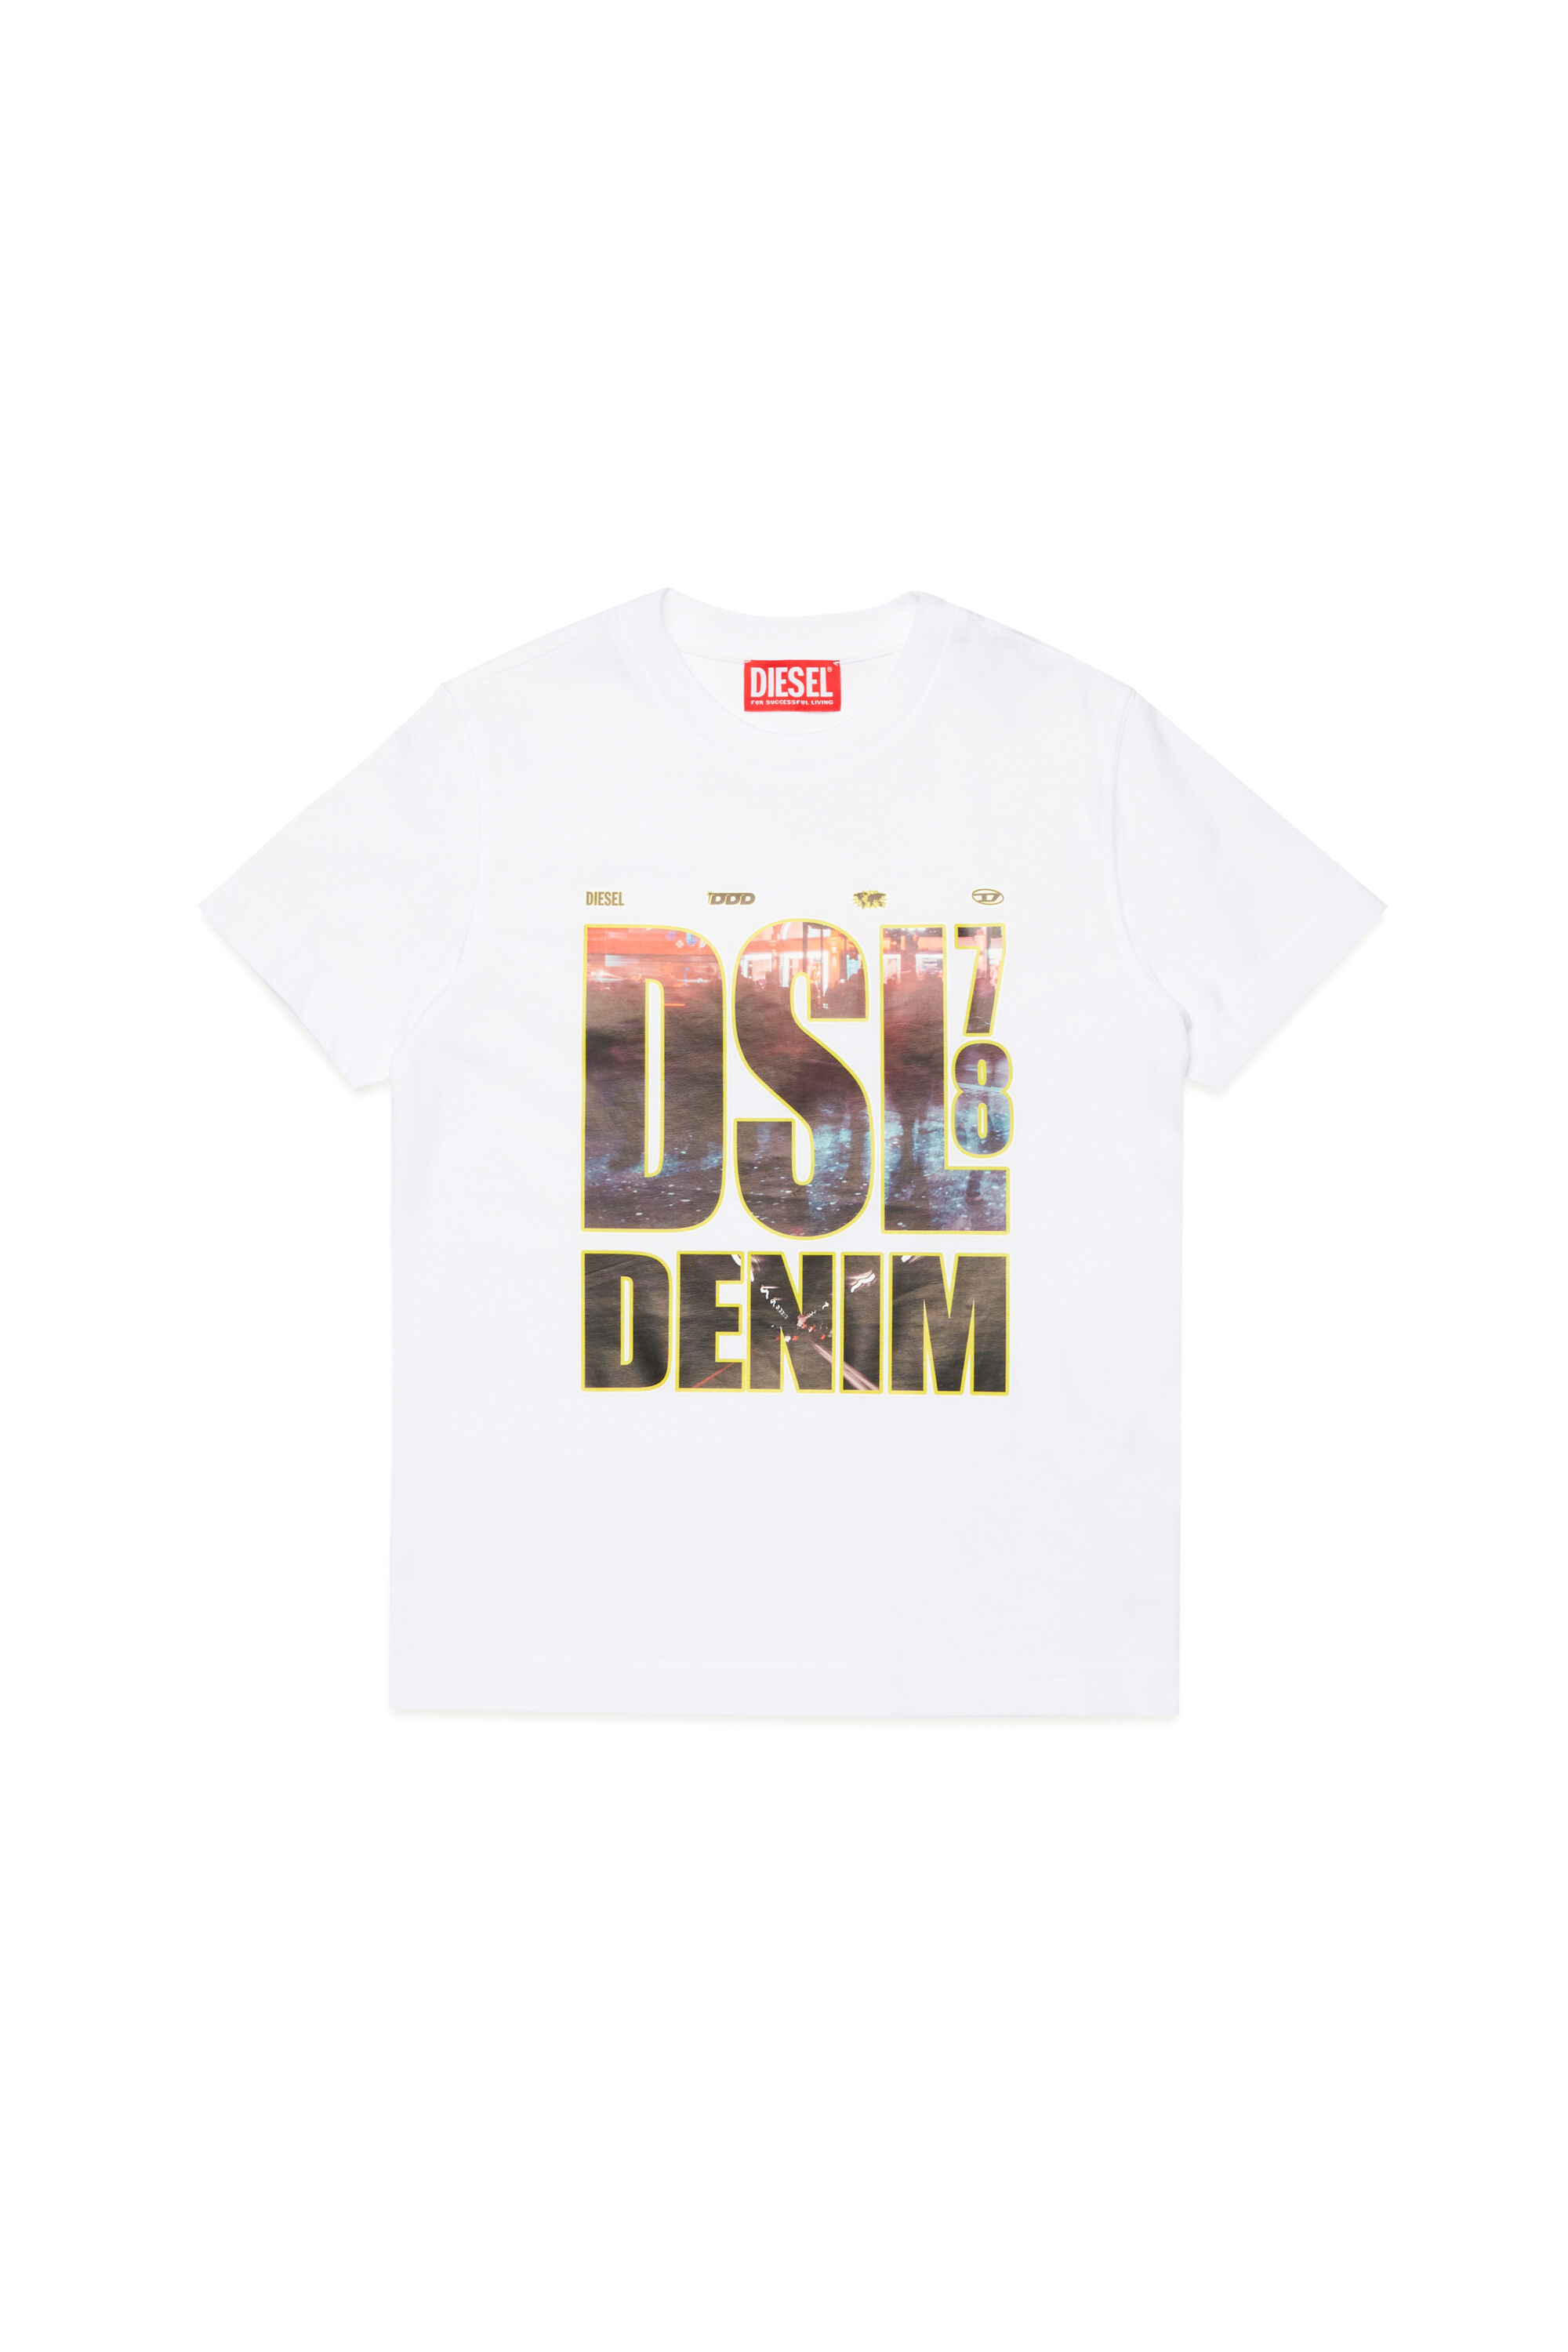 Diesel - TDIEGORL7, Male T-shirt with photo Diesel Denim 78 print in ホワイト - Image 1